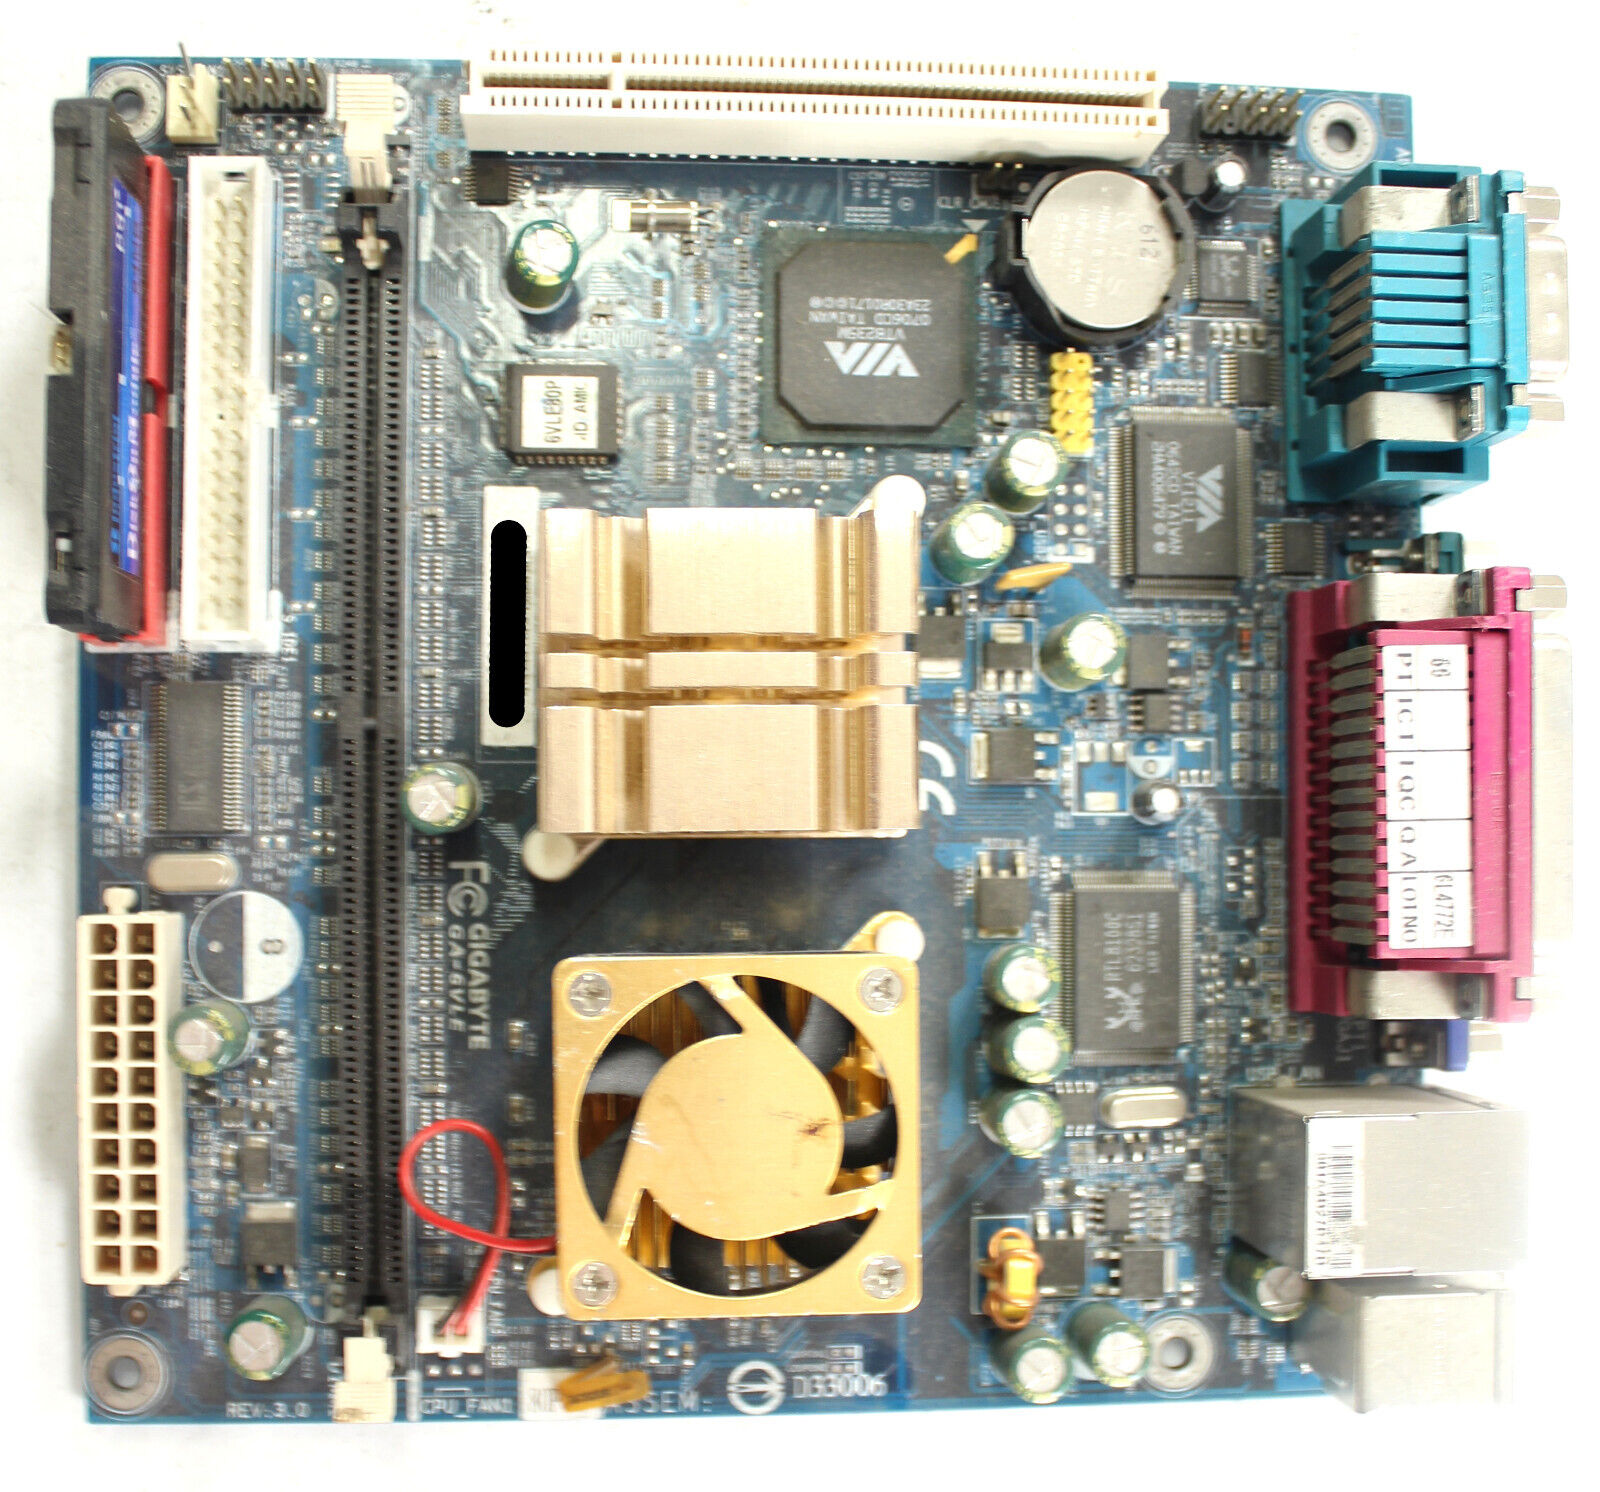 GIGABYTE Mini-ITX Industrial Motherboard Mainboard GA-6VLE Board w/ 64MB DOM